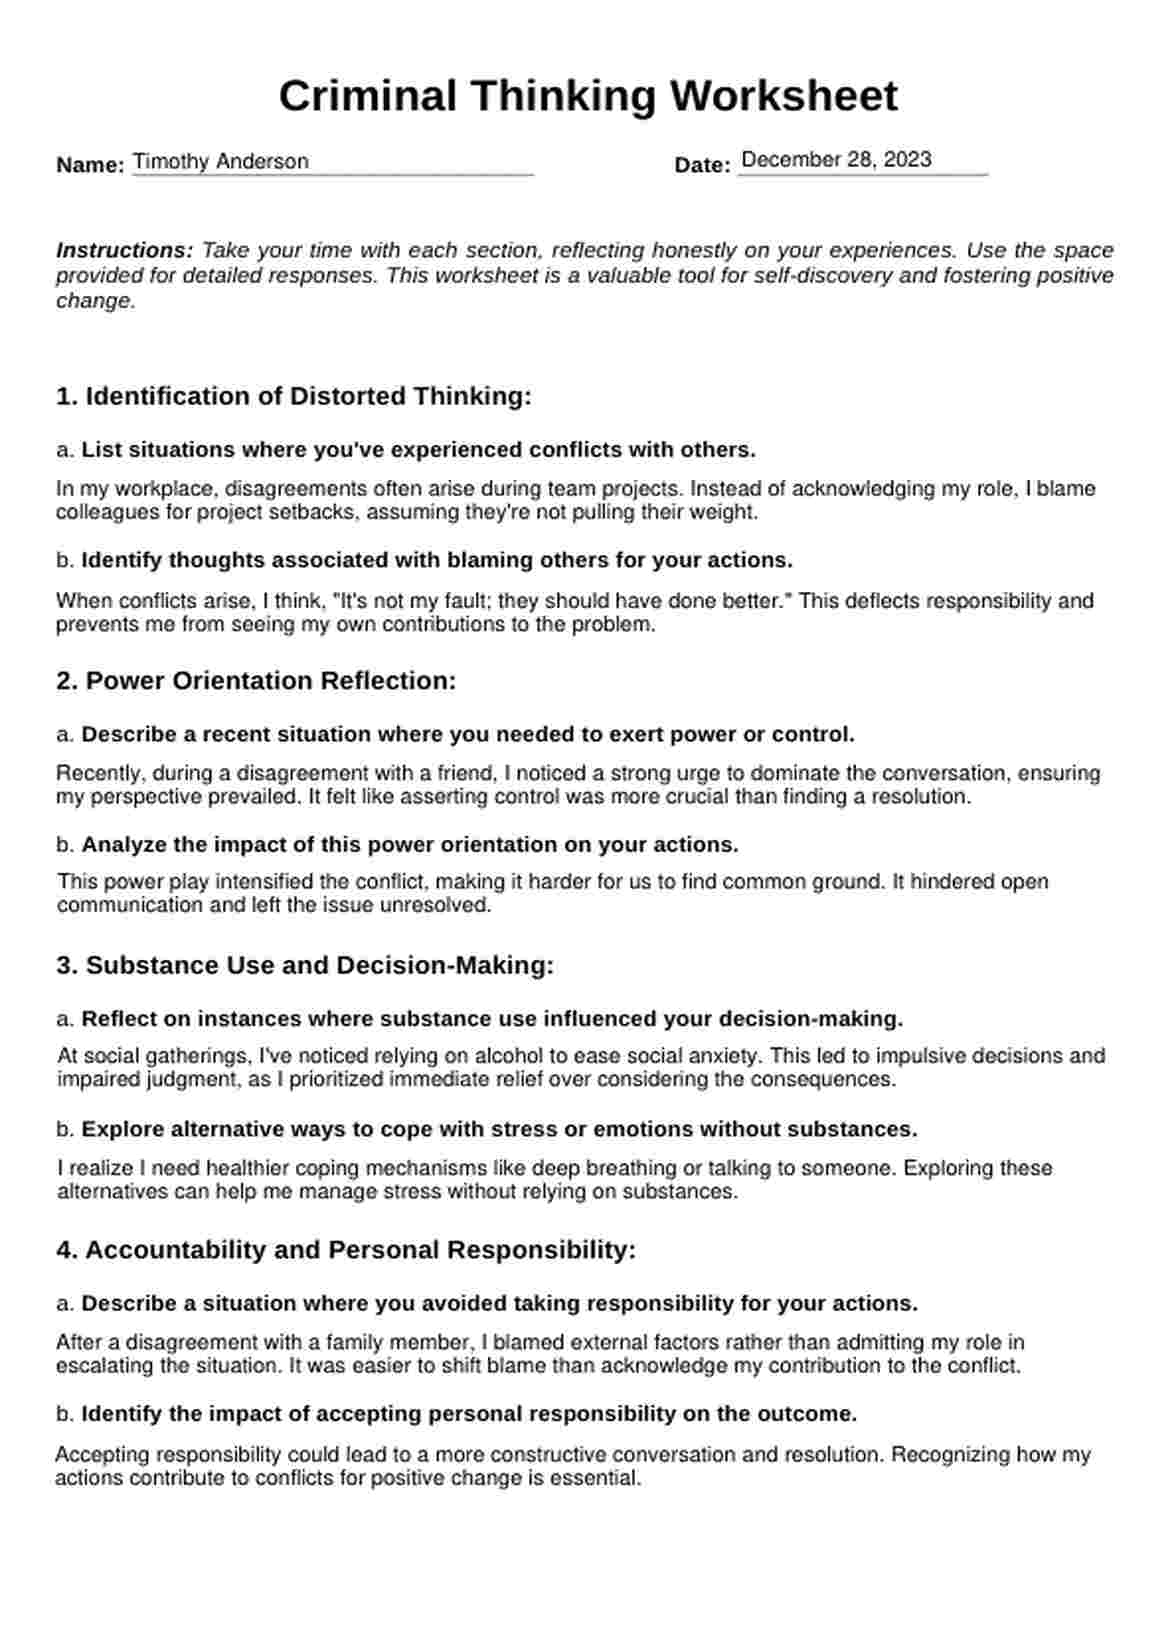 Criminal Thinking Worksheet PDF PDF Example